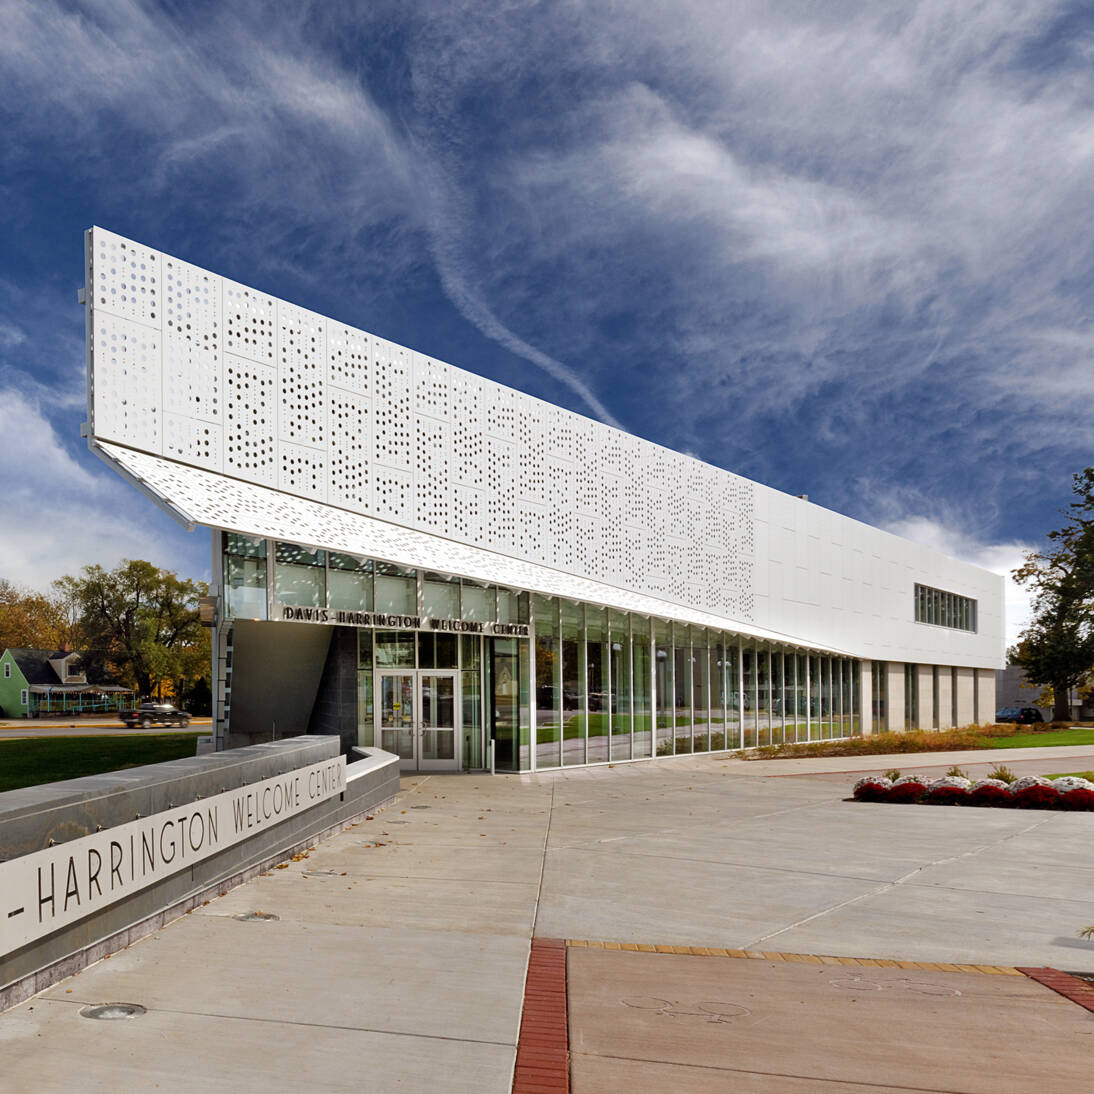 Student Welcome Center, Springfield, Missouri, USA